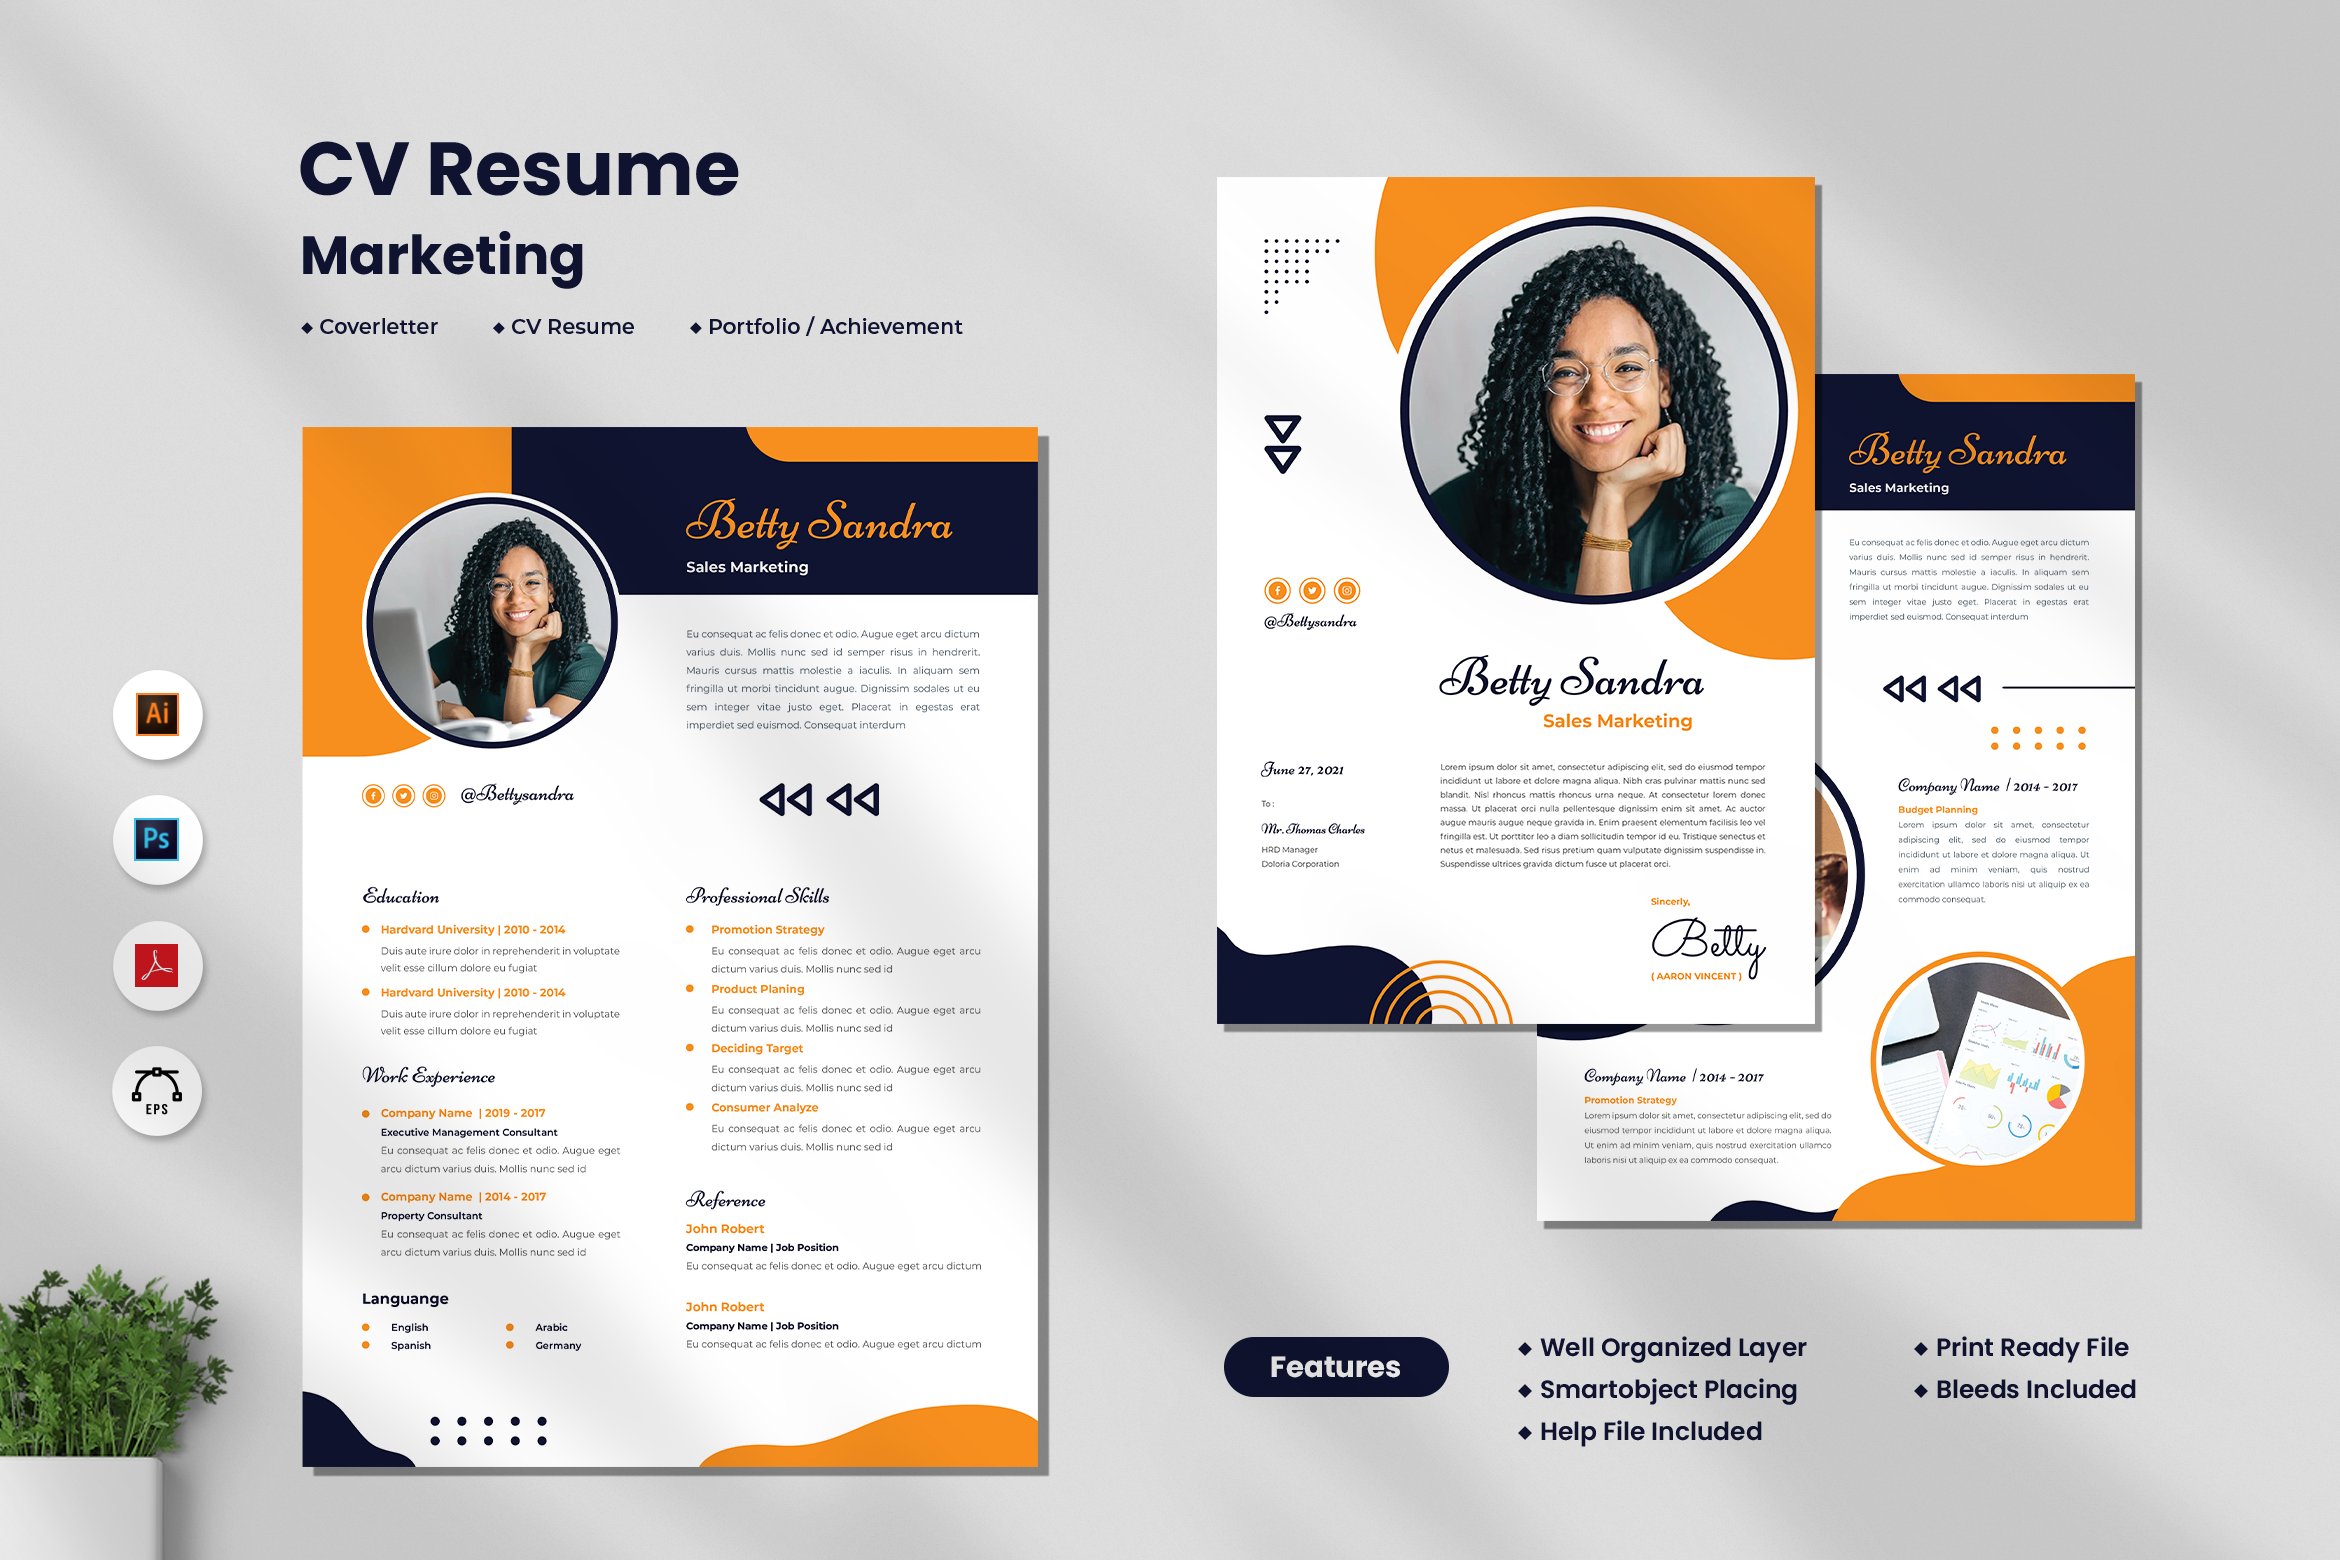 Sales Marketing CV Resume cover image.